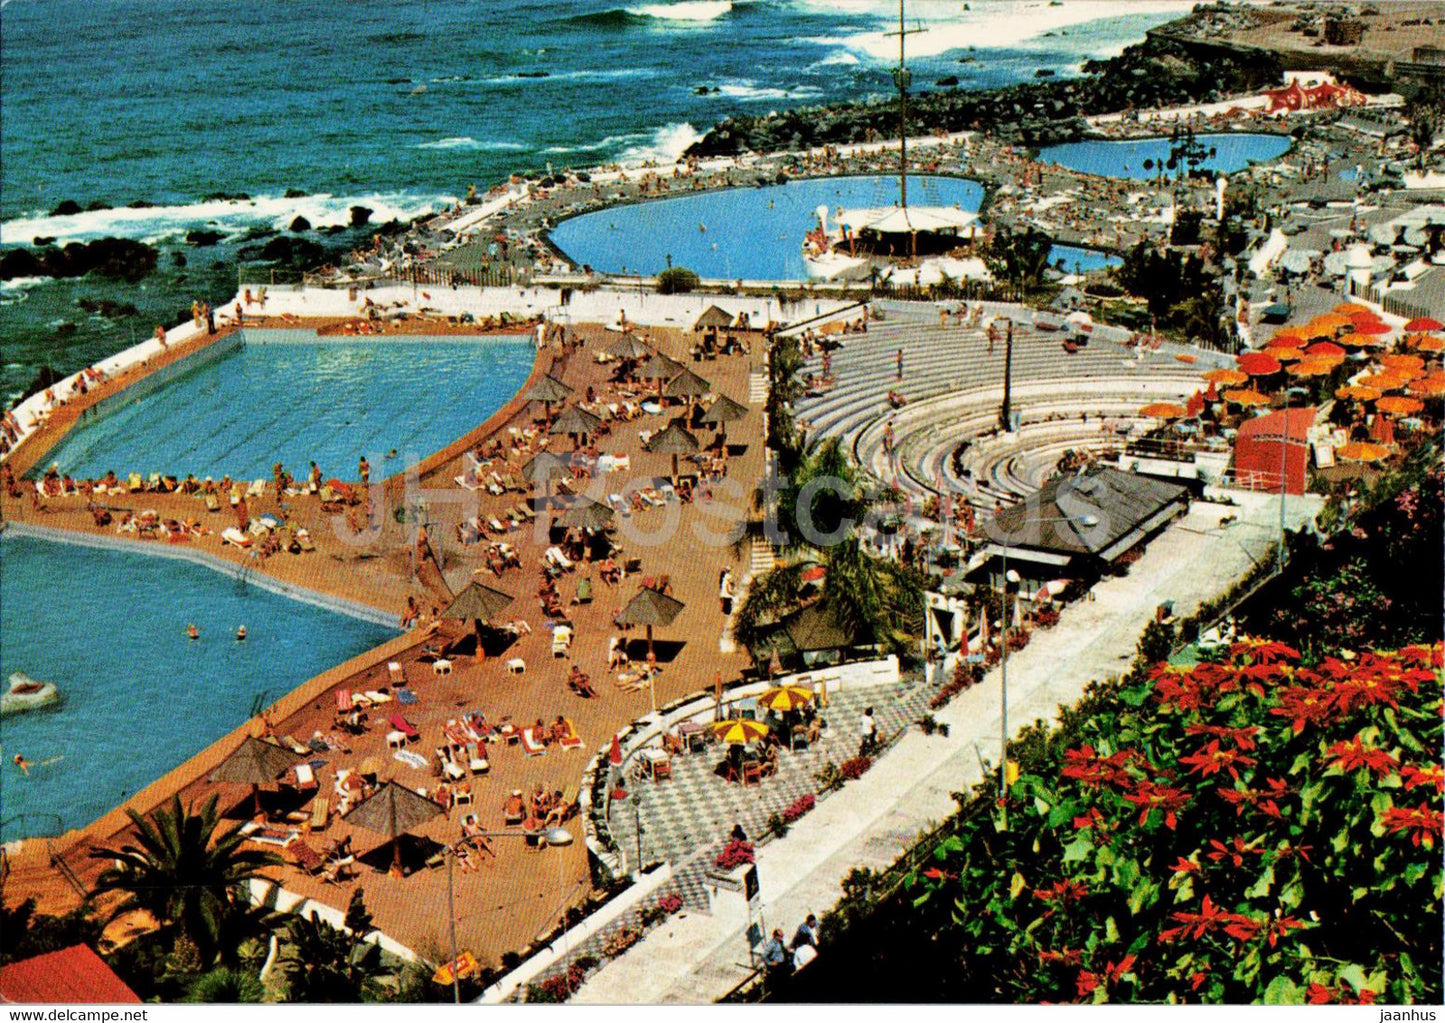 Puerto de la Cruz - Piscina San Telmo - swimming pool - Tenerife - Gran Canaria - 708 - Spain - unused - JH Postcards